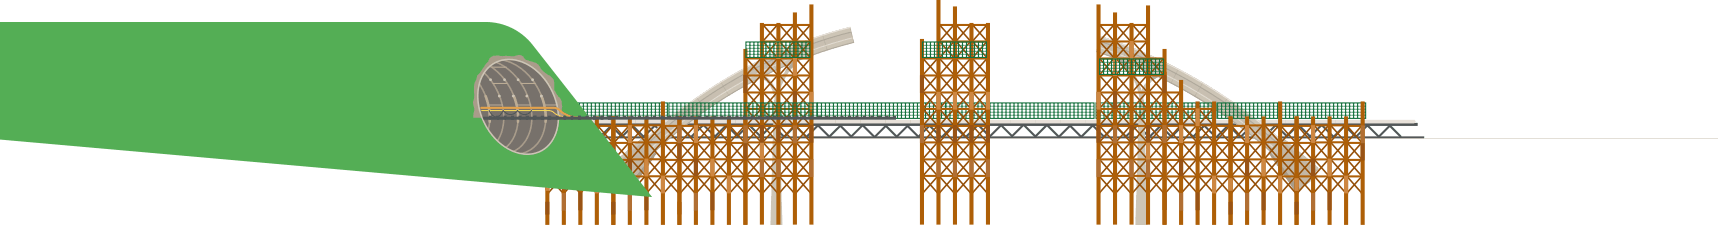 Bridge, halfway through construction